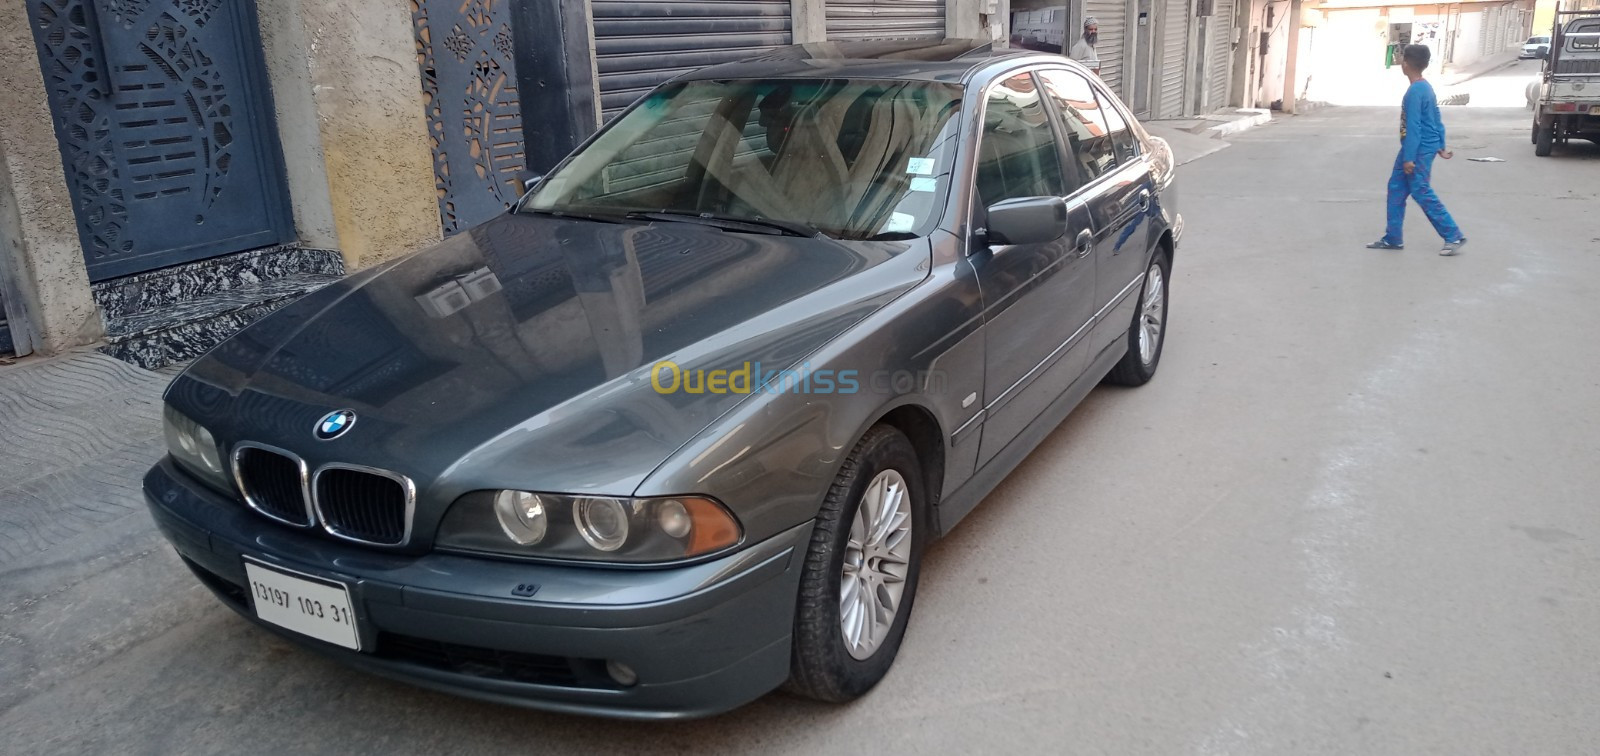 BMW Série 5 2003 Premium